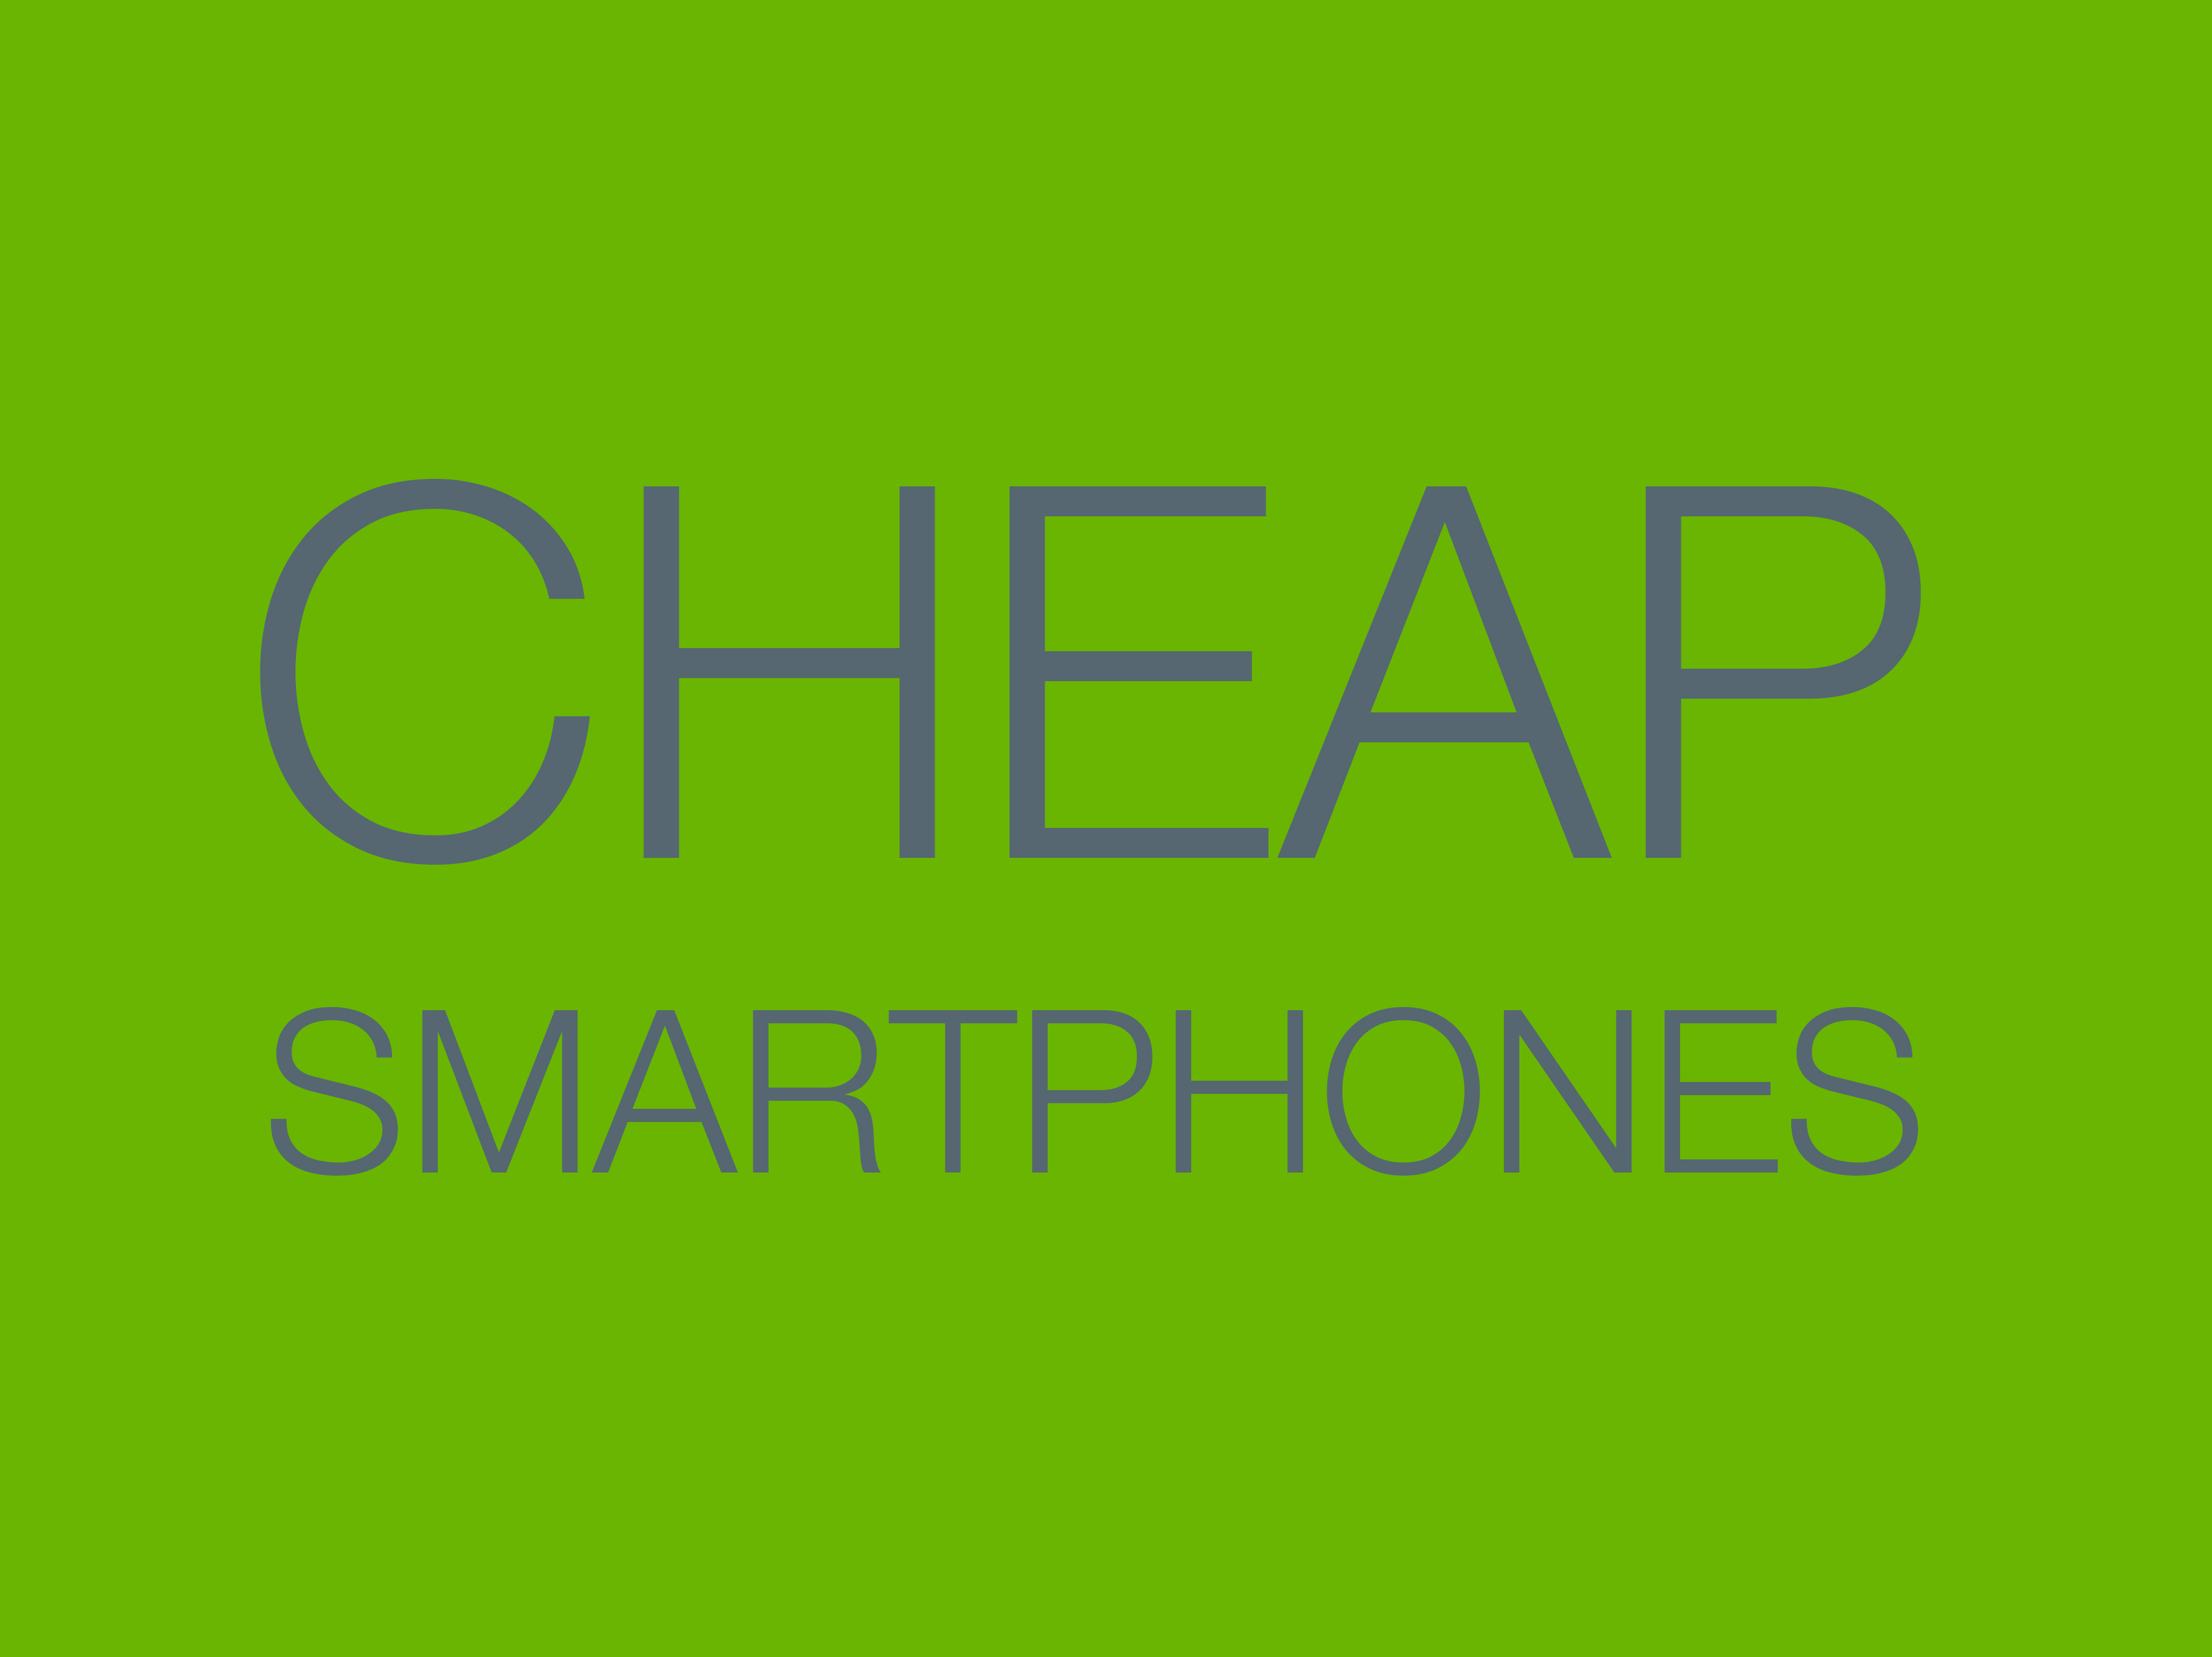 Cheap smartphones